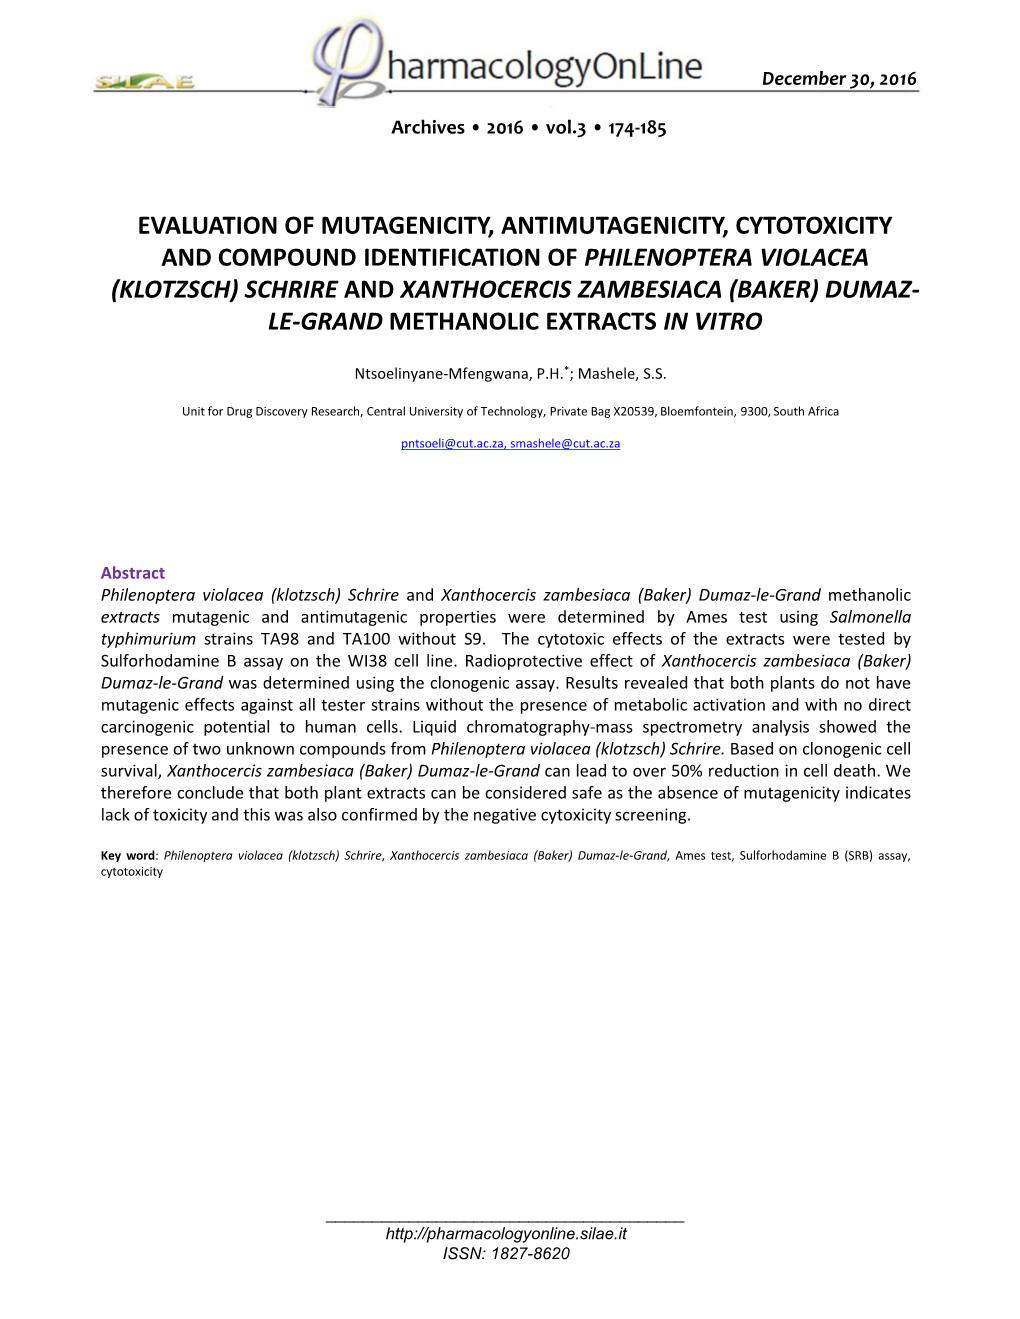 Evaluation of Mutagenicity, Antimutagenicity, Cytotoxicity